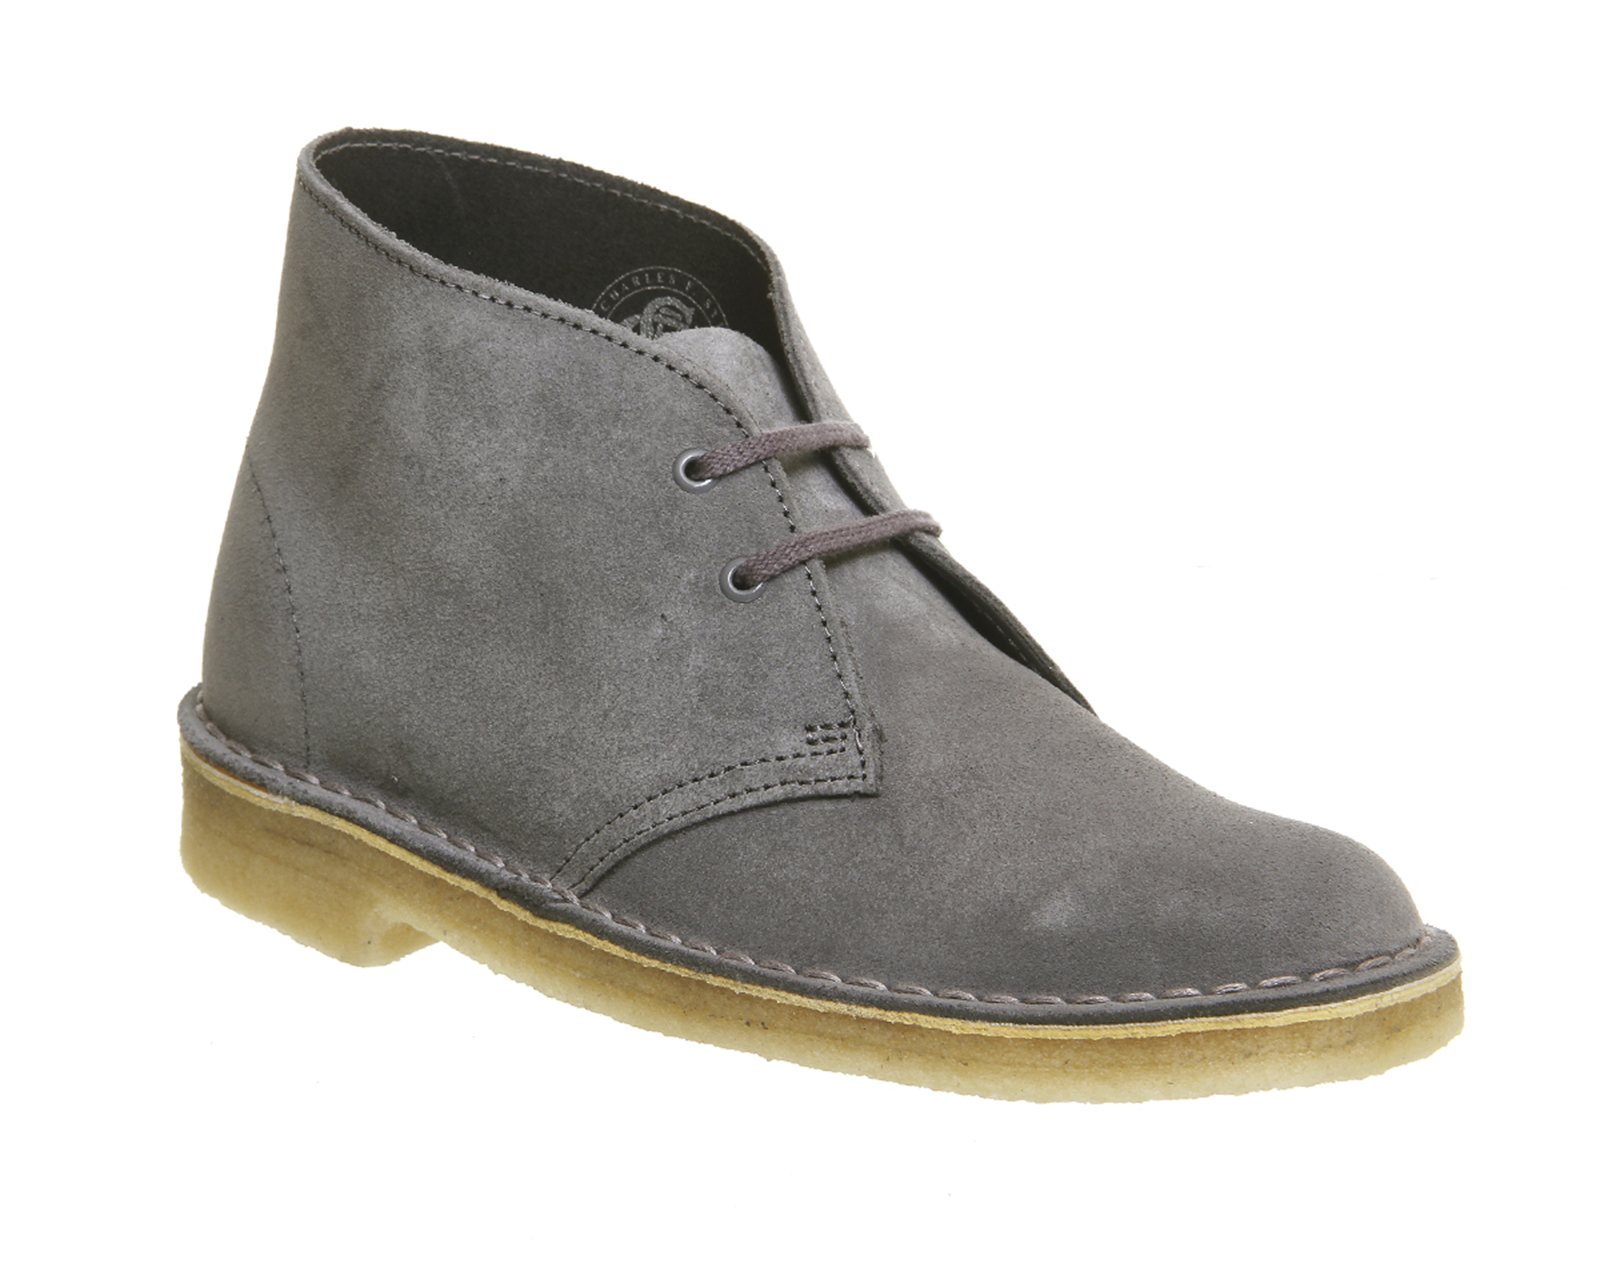 Clarks Originals Desert Boot Grey Suede - Ankle Boots